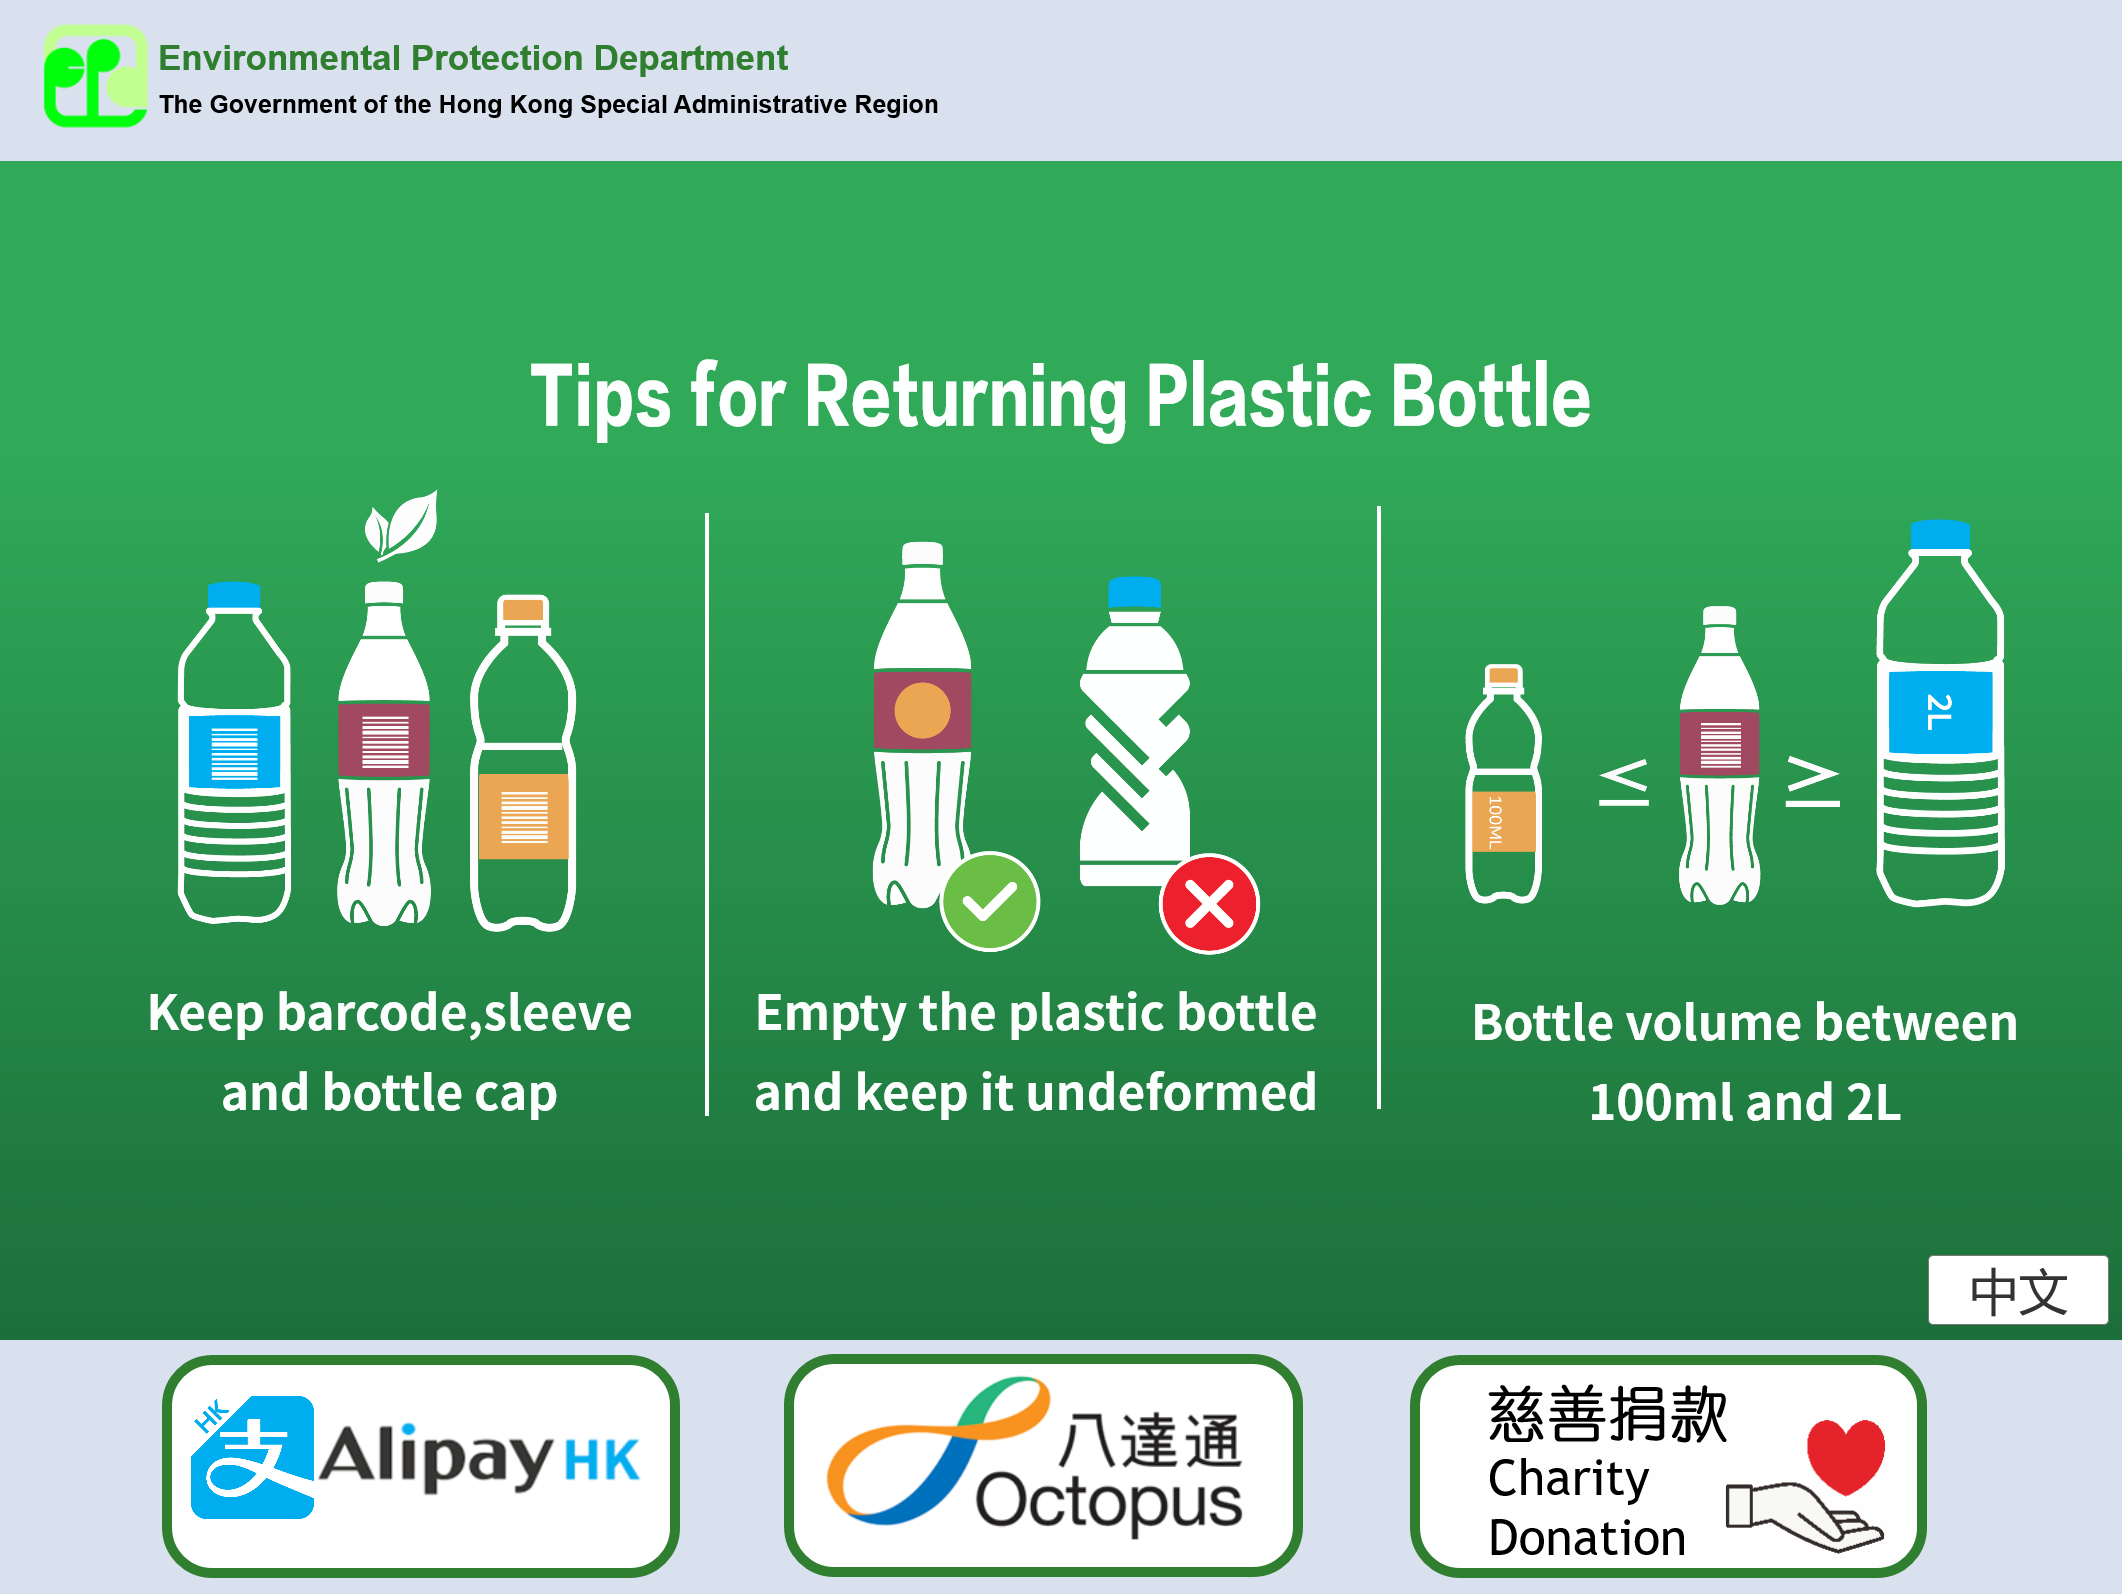 Select cash rebate or charity donation, then start the return of plastic beverage bottles